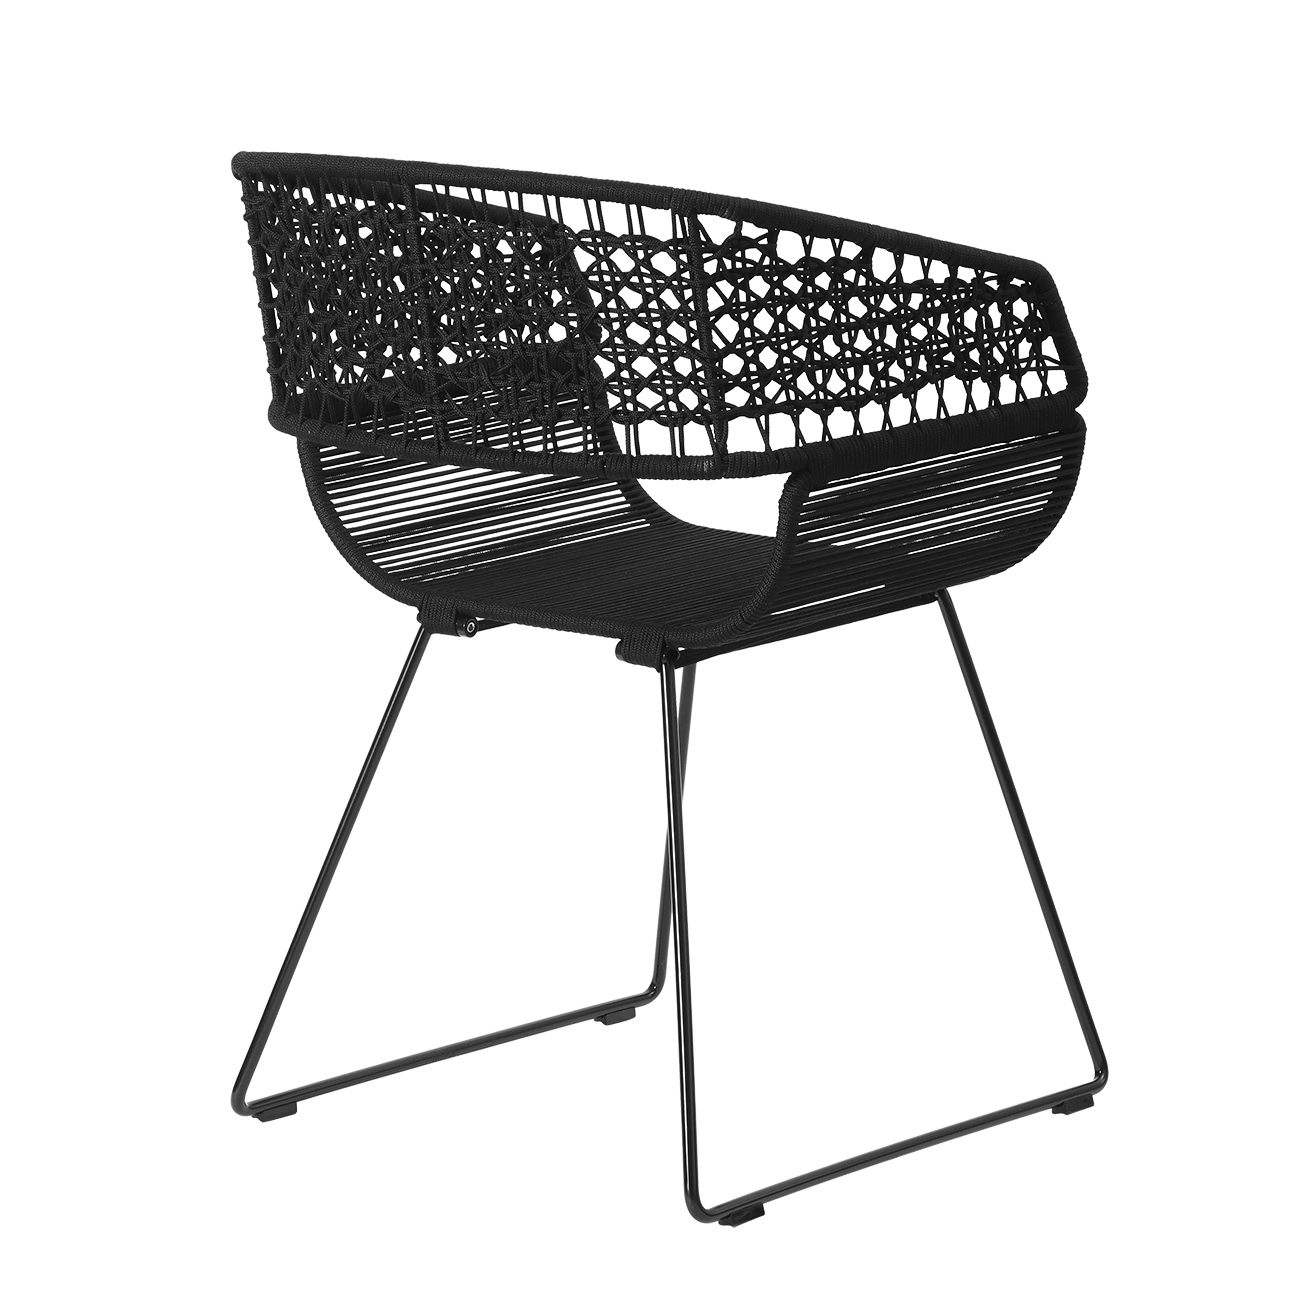 Exterior Garden Black Weave Chair Outdoor Modern Rattan Chair